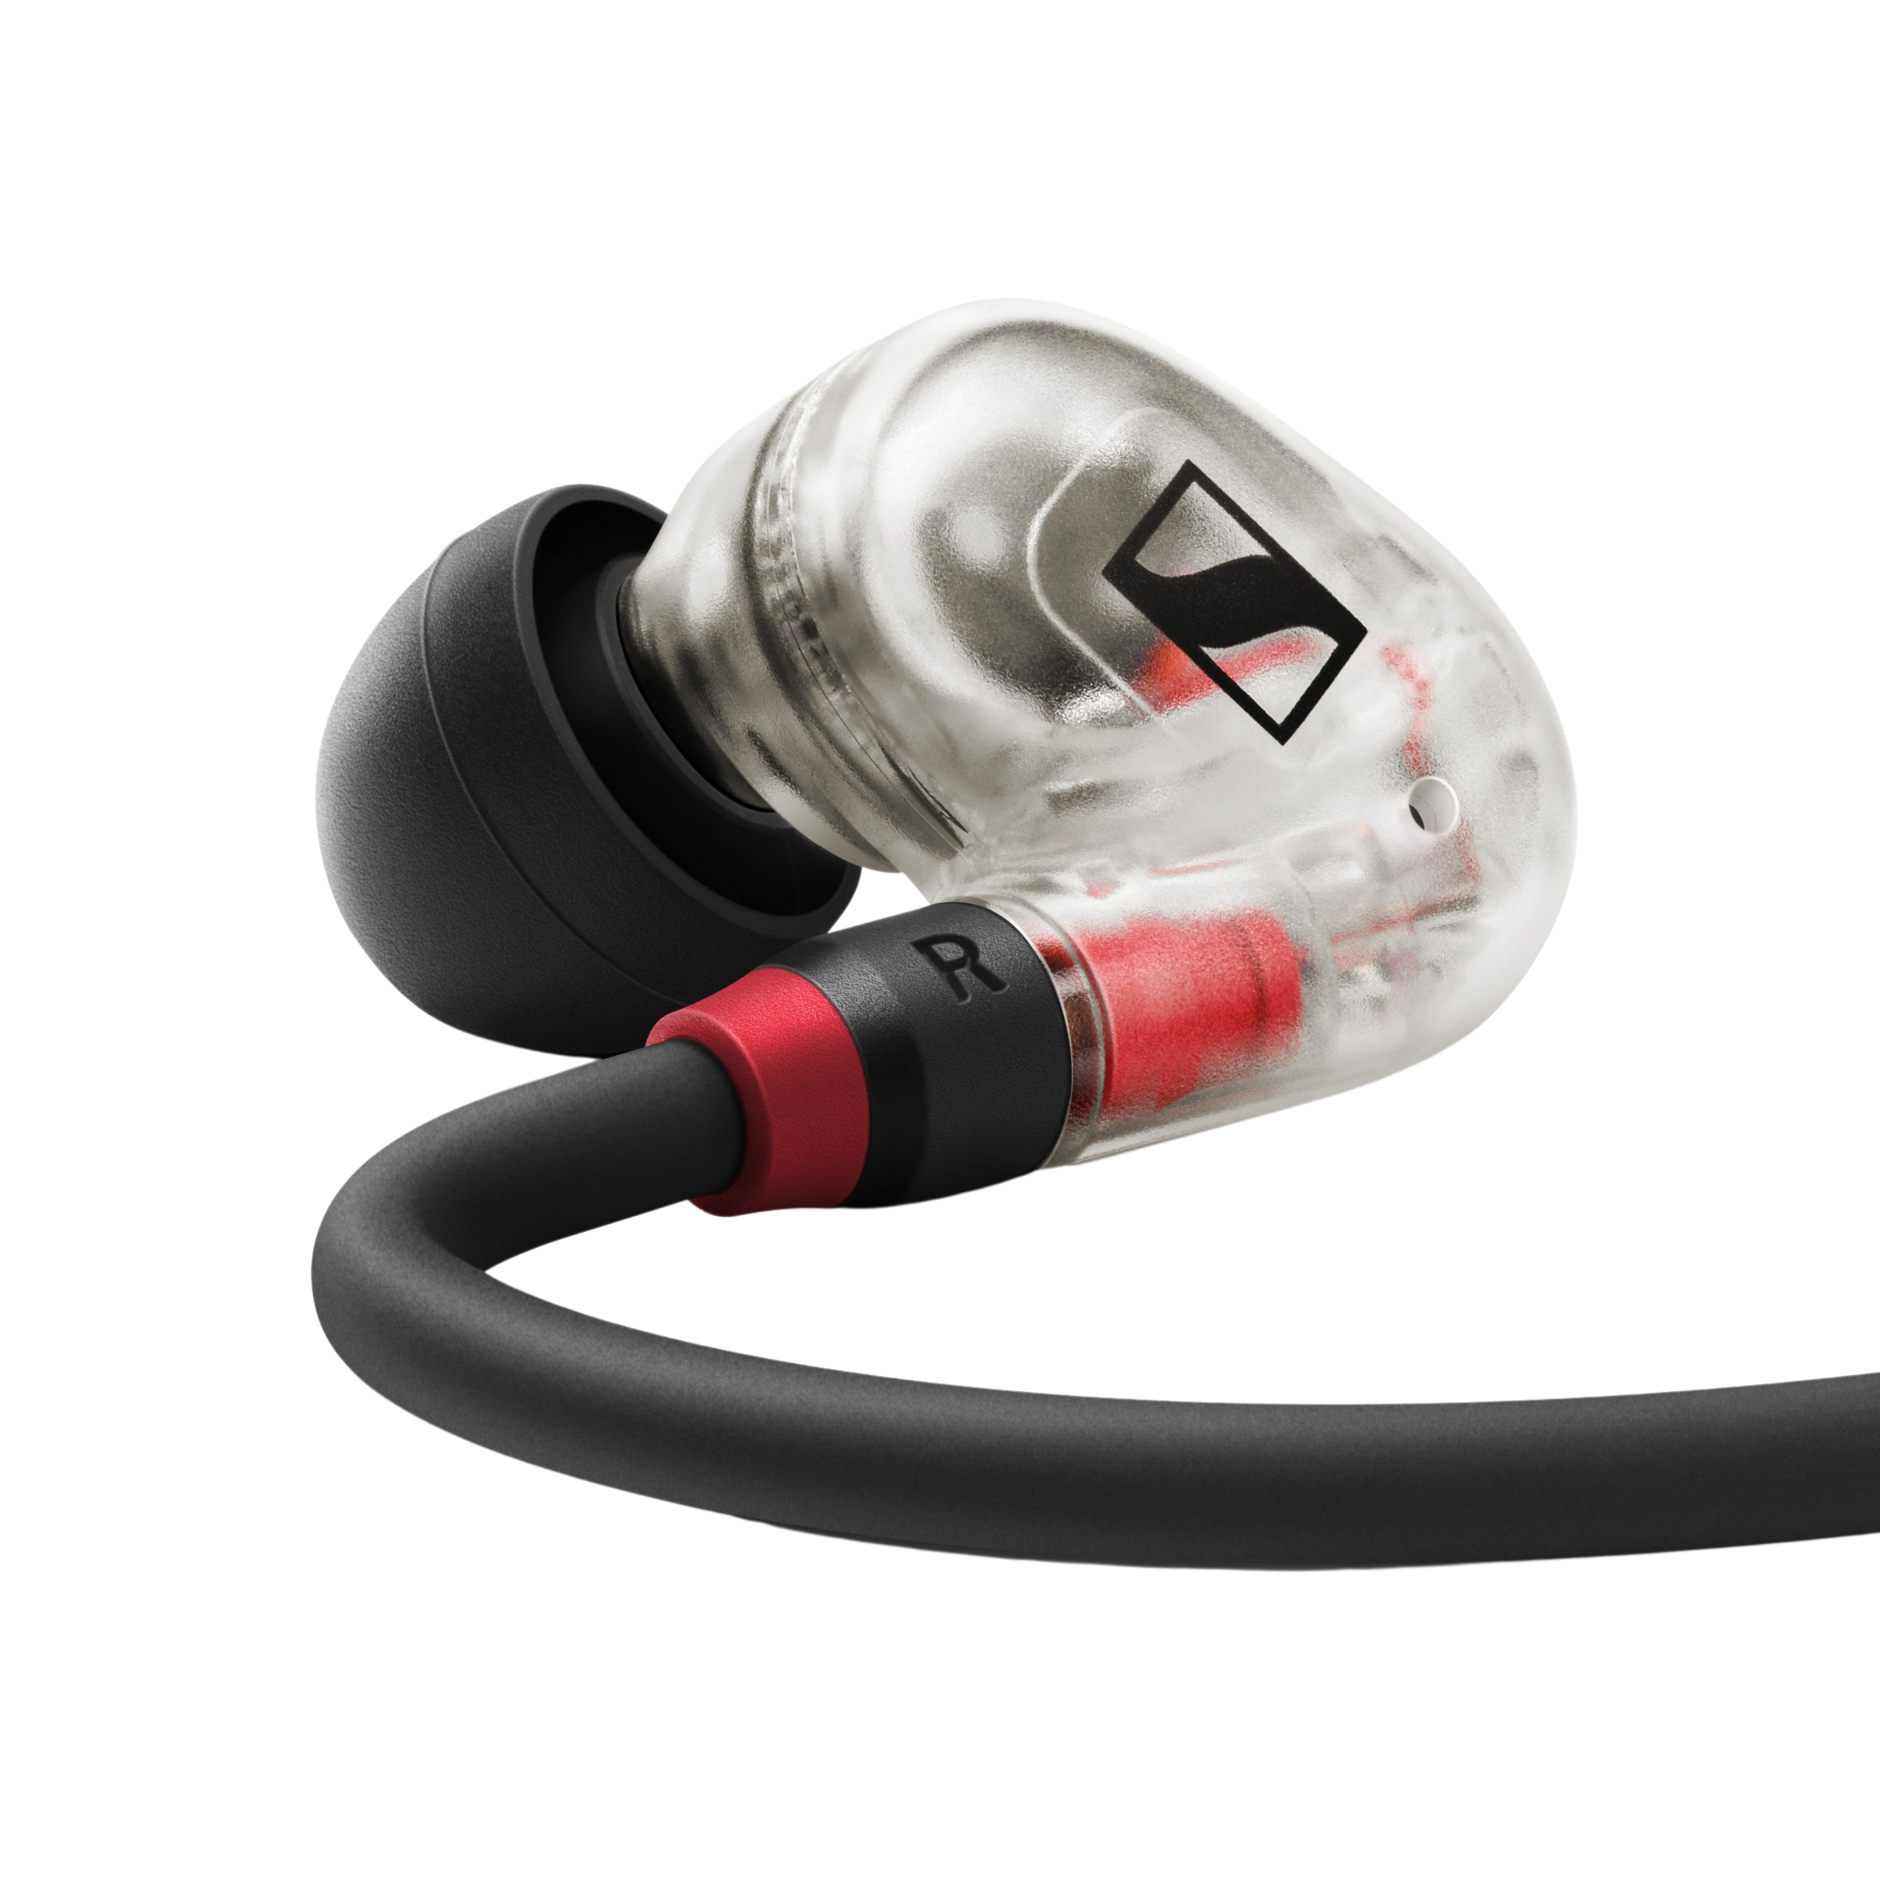 In-ear monitoring IE 100 Pro | Sennheiser